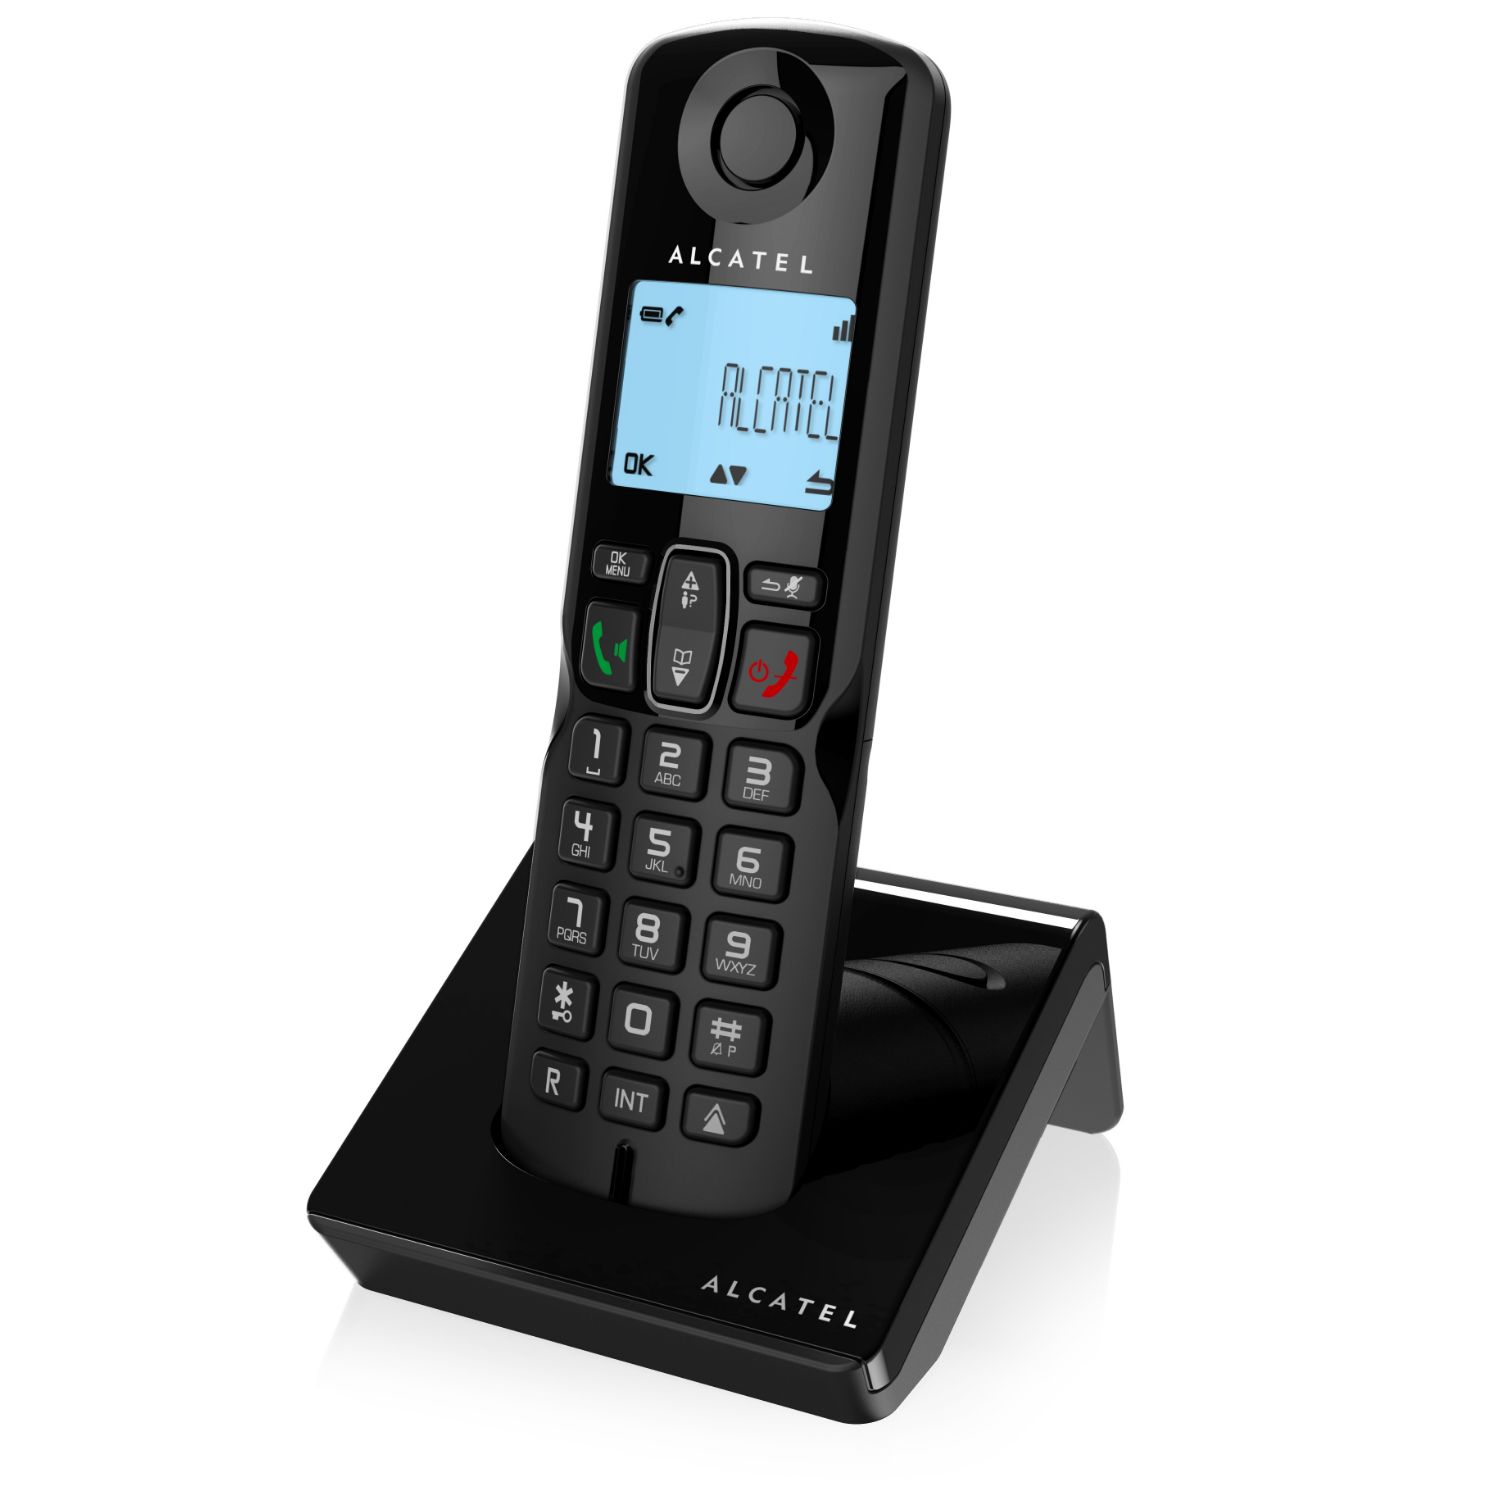 ATL1415520 - Telfono Inalmbrico Alcatel DEC S250 Negro (ATL1415520)